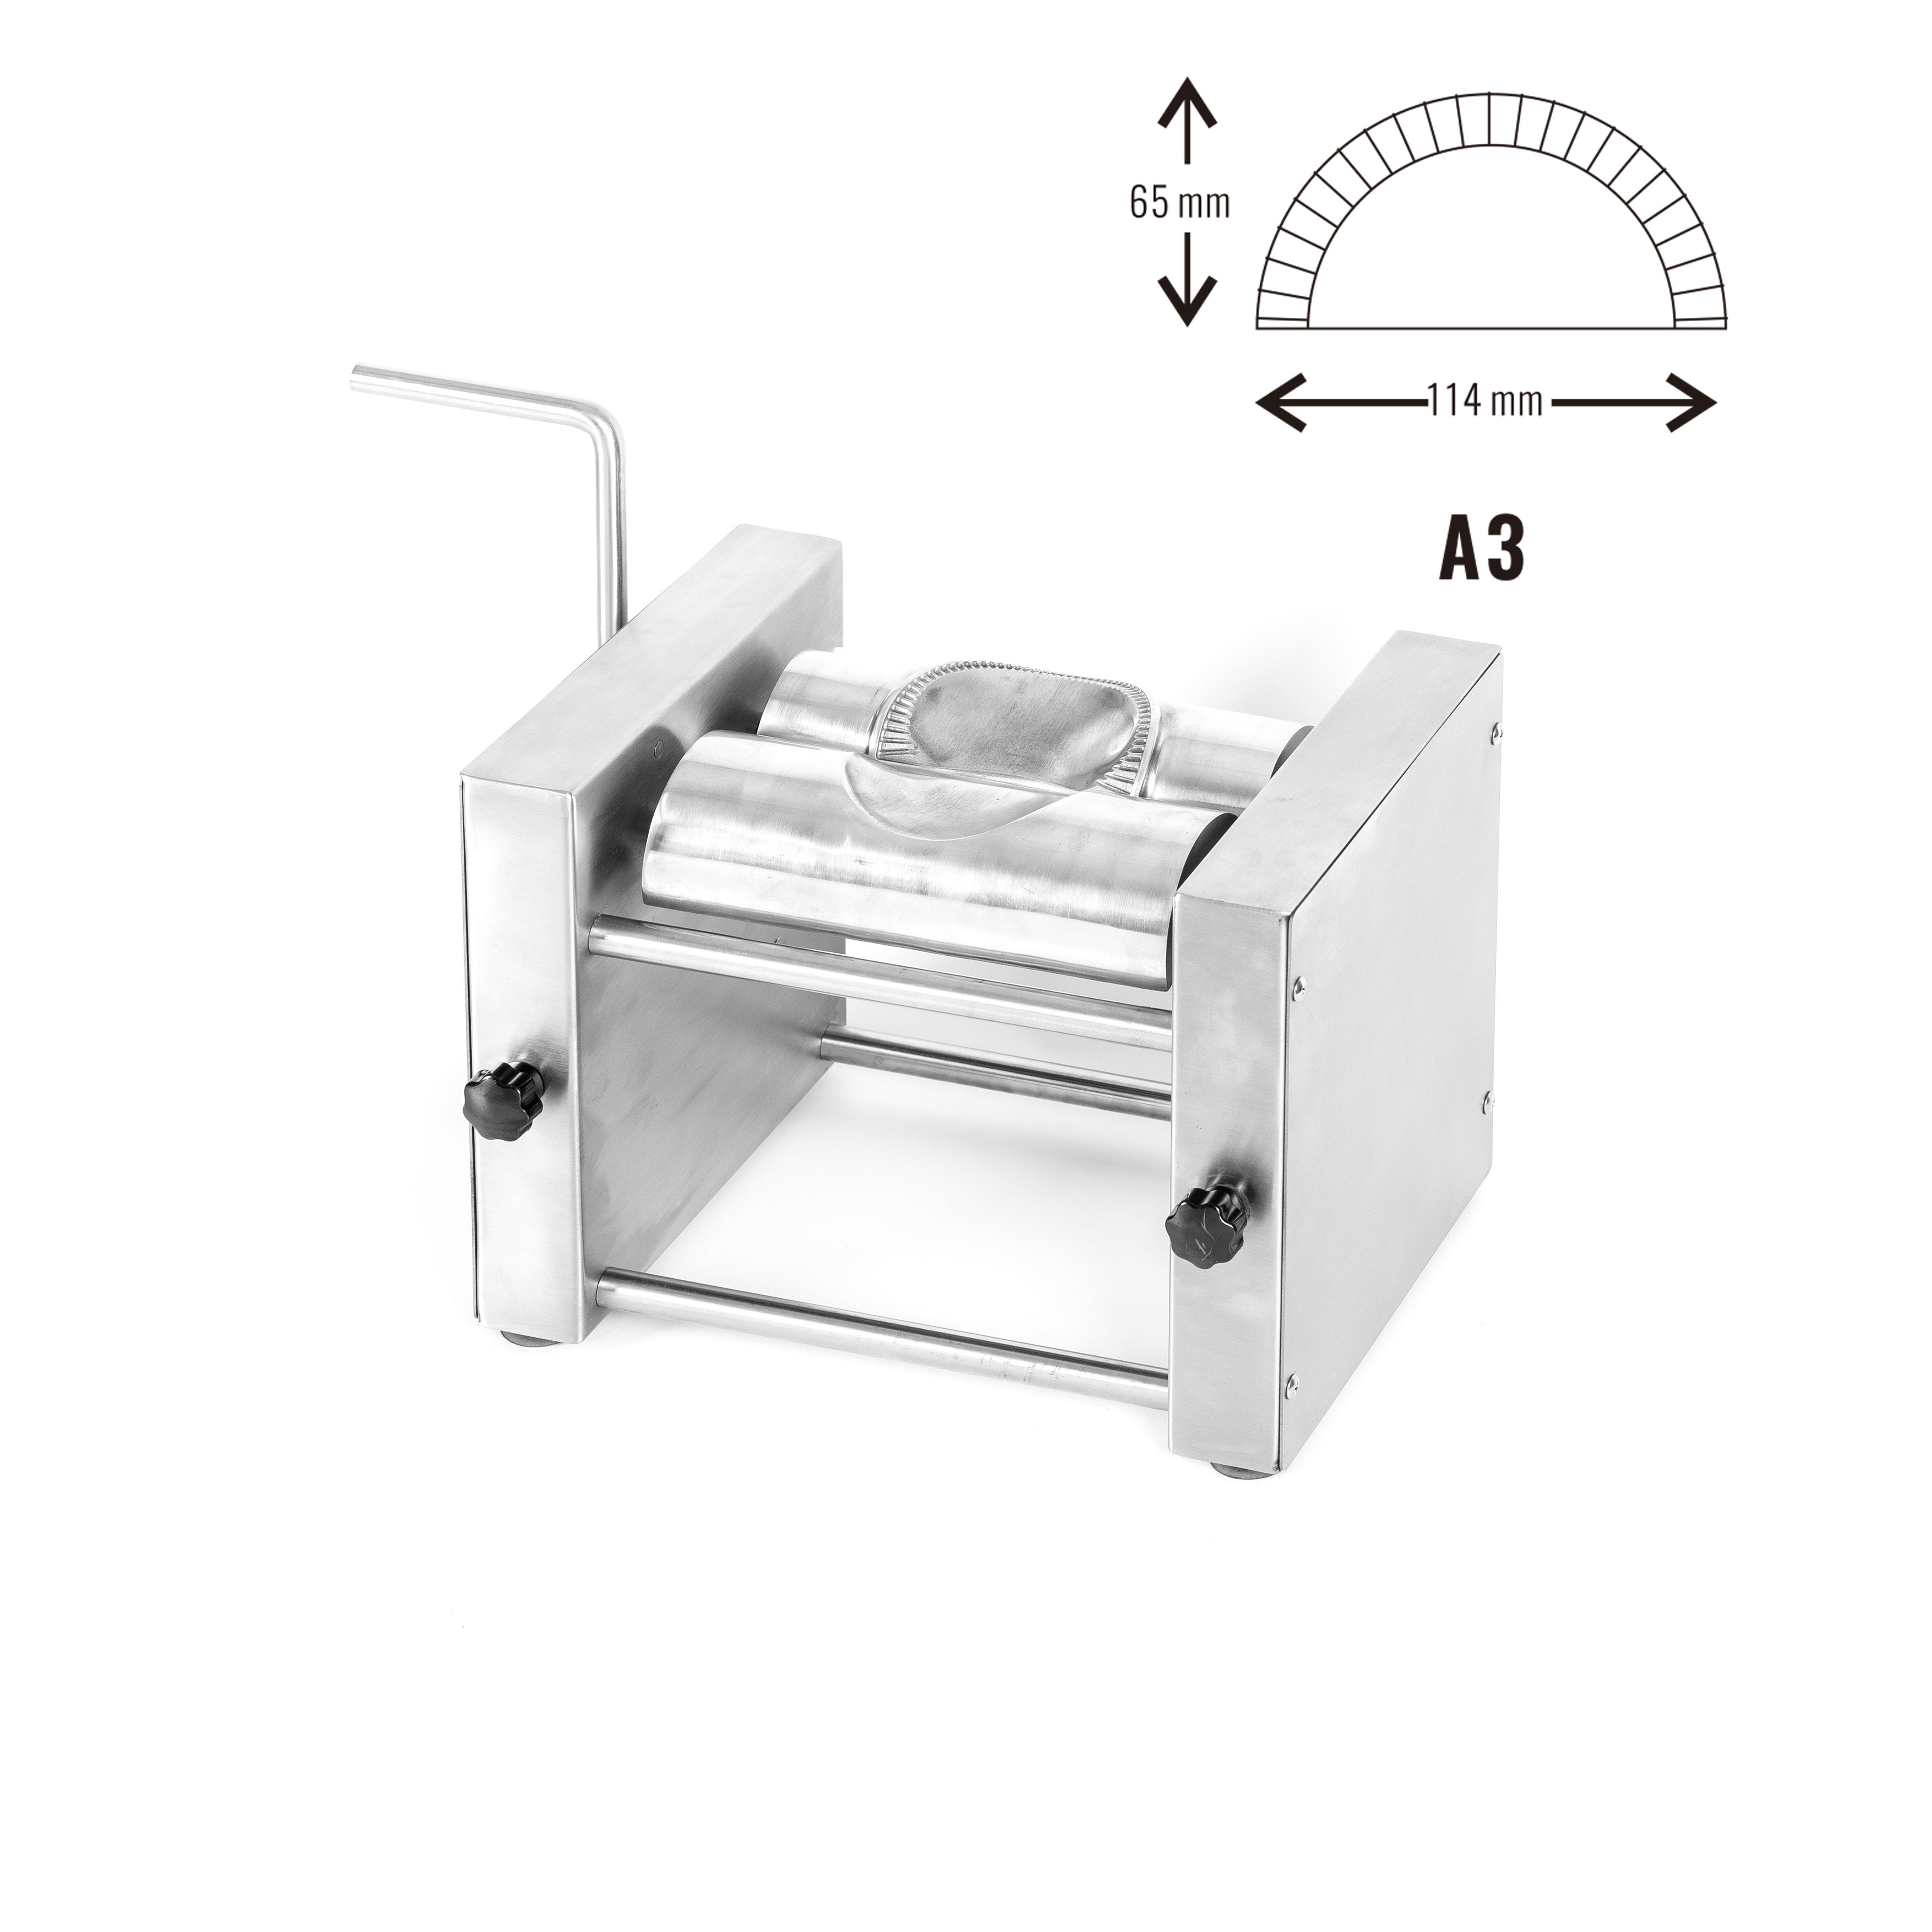 DEM-A3 Professional Pasta Machine Dumplings Maker Turnover Machine - Front View